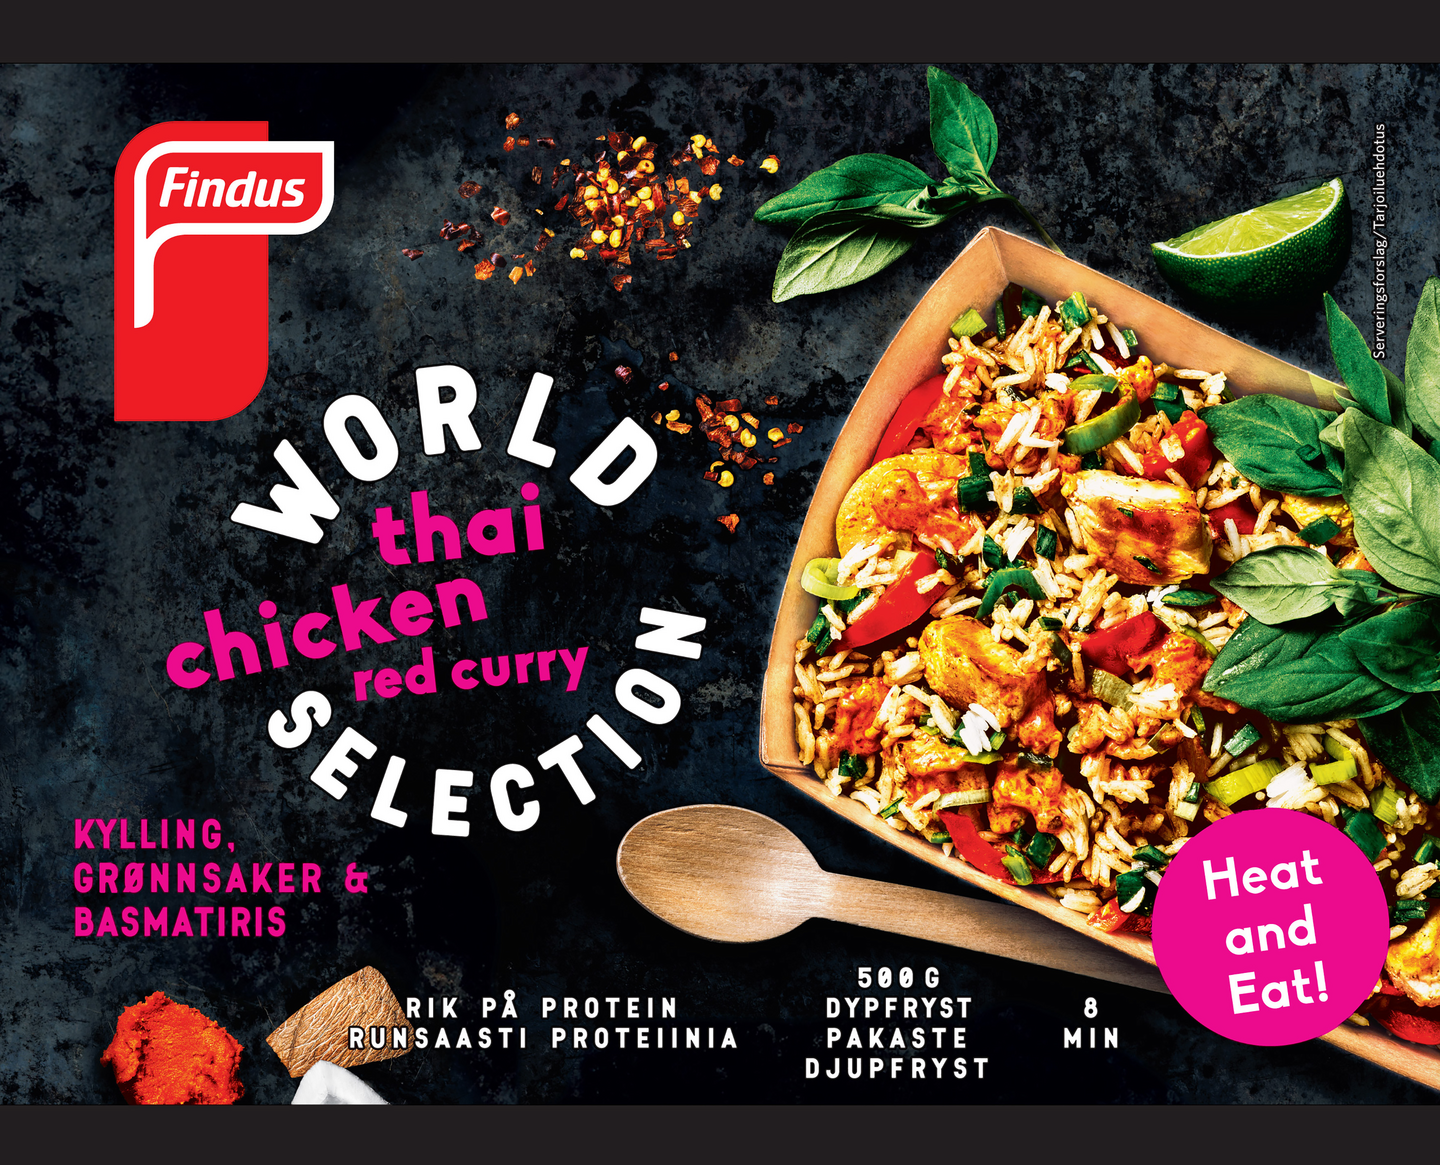 Findus World Selection Thai Red Curry Chicken 500g pakaste